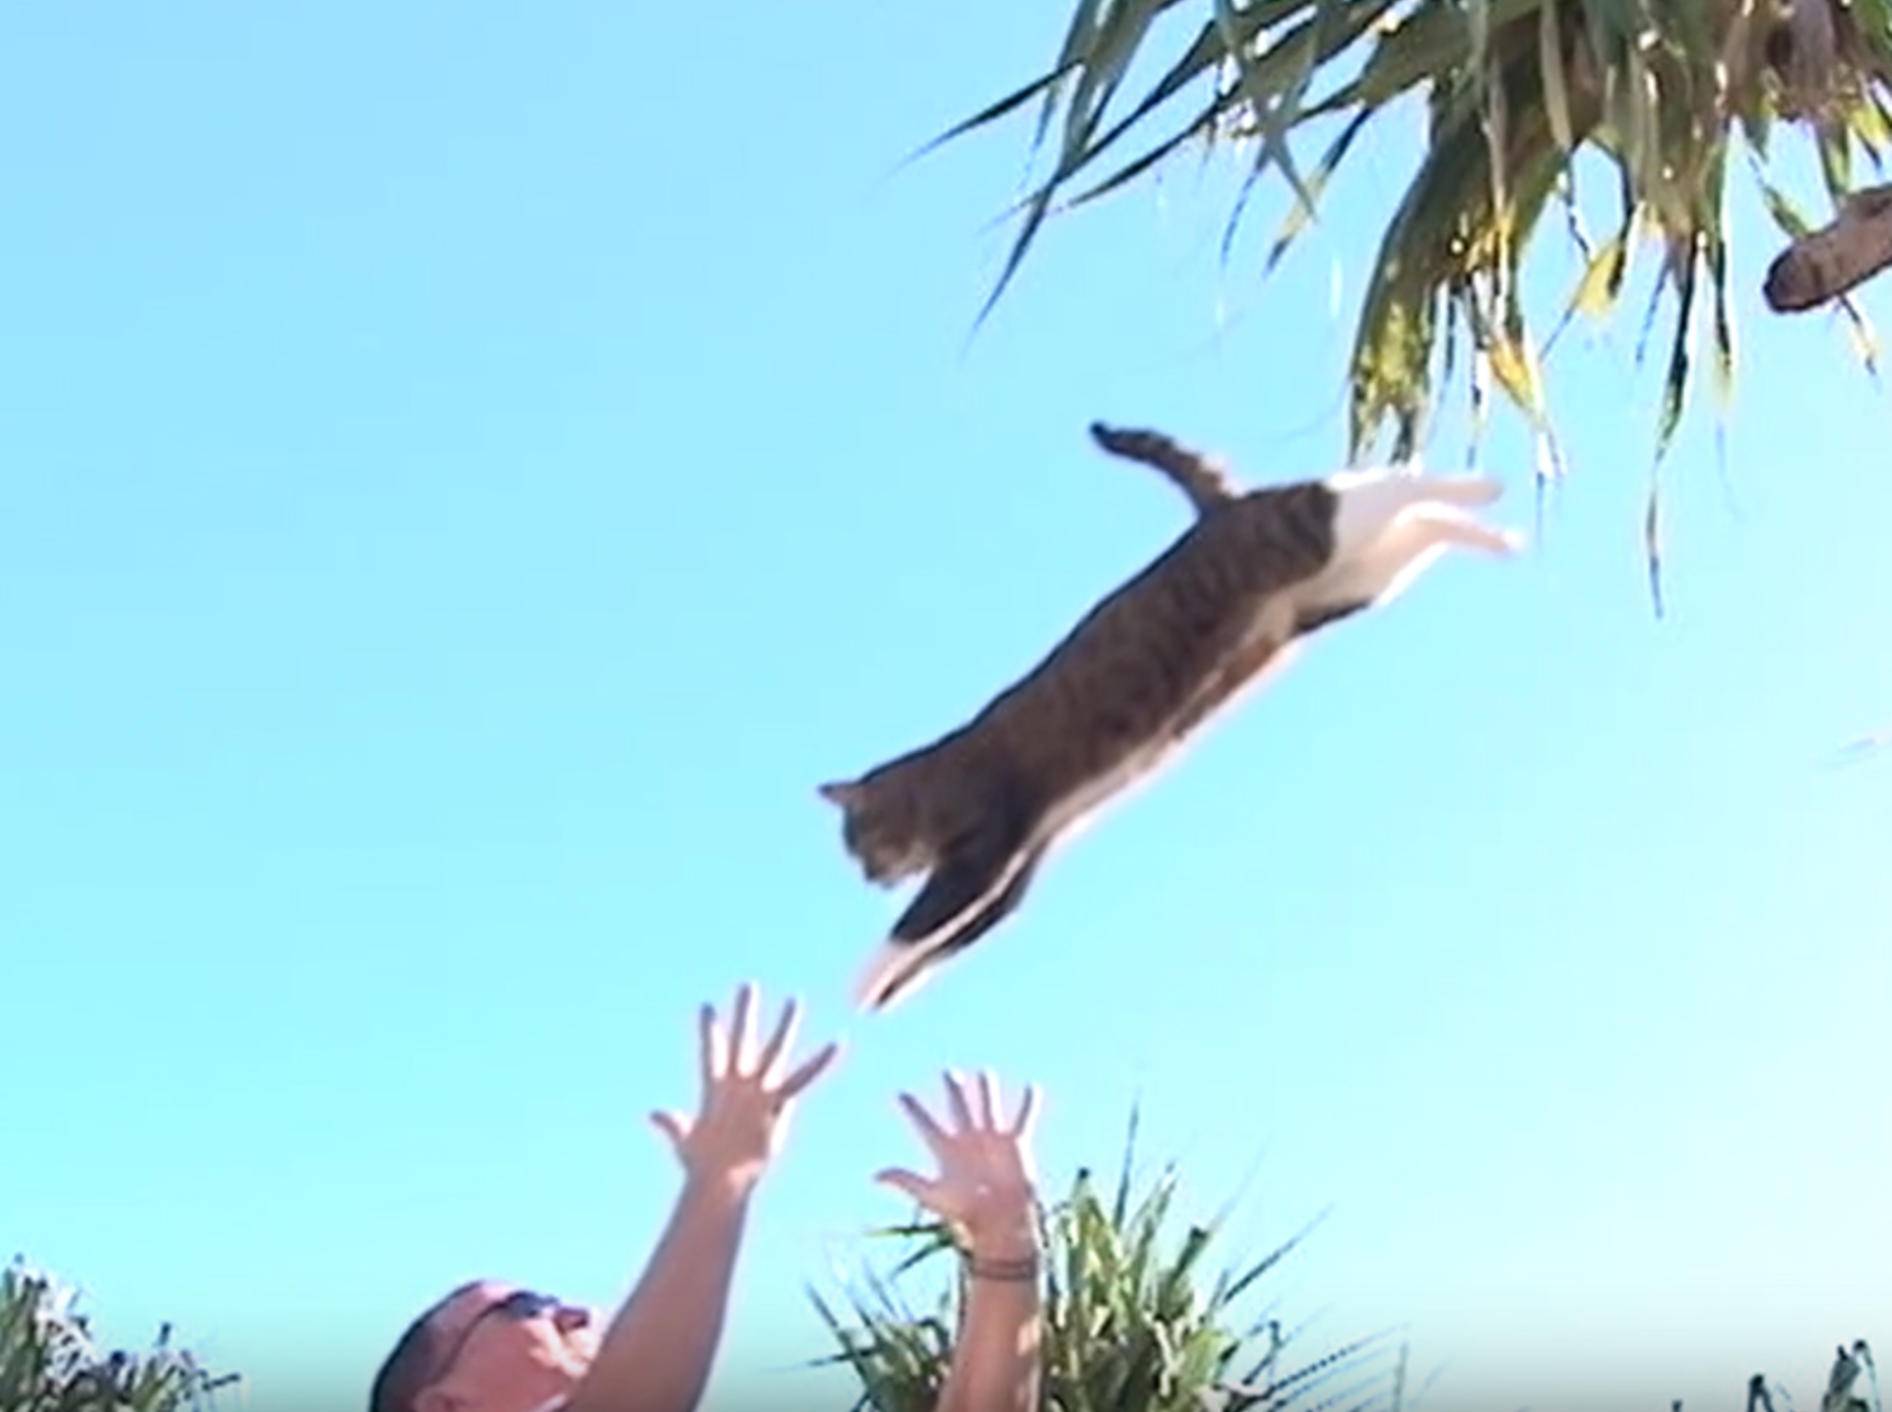 Katze Didga springt in Herrchens Arme – YouTube / CATMANTOO